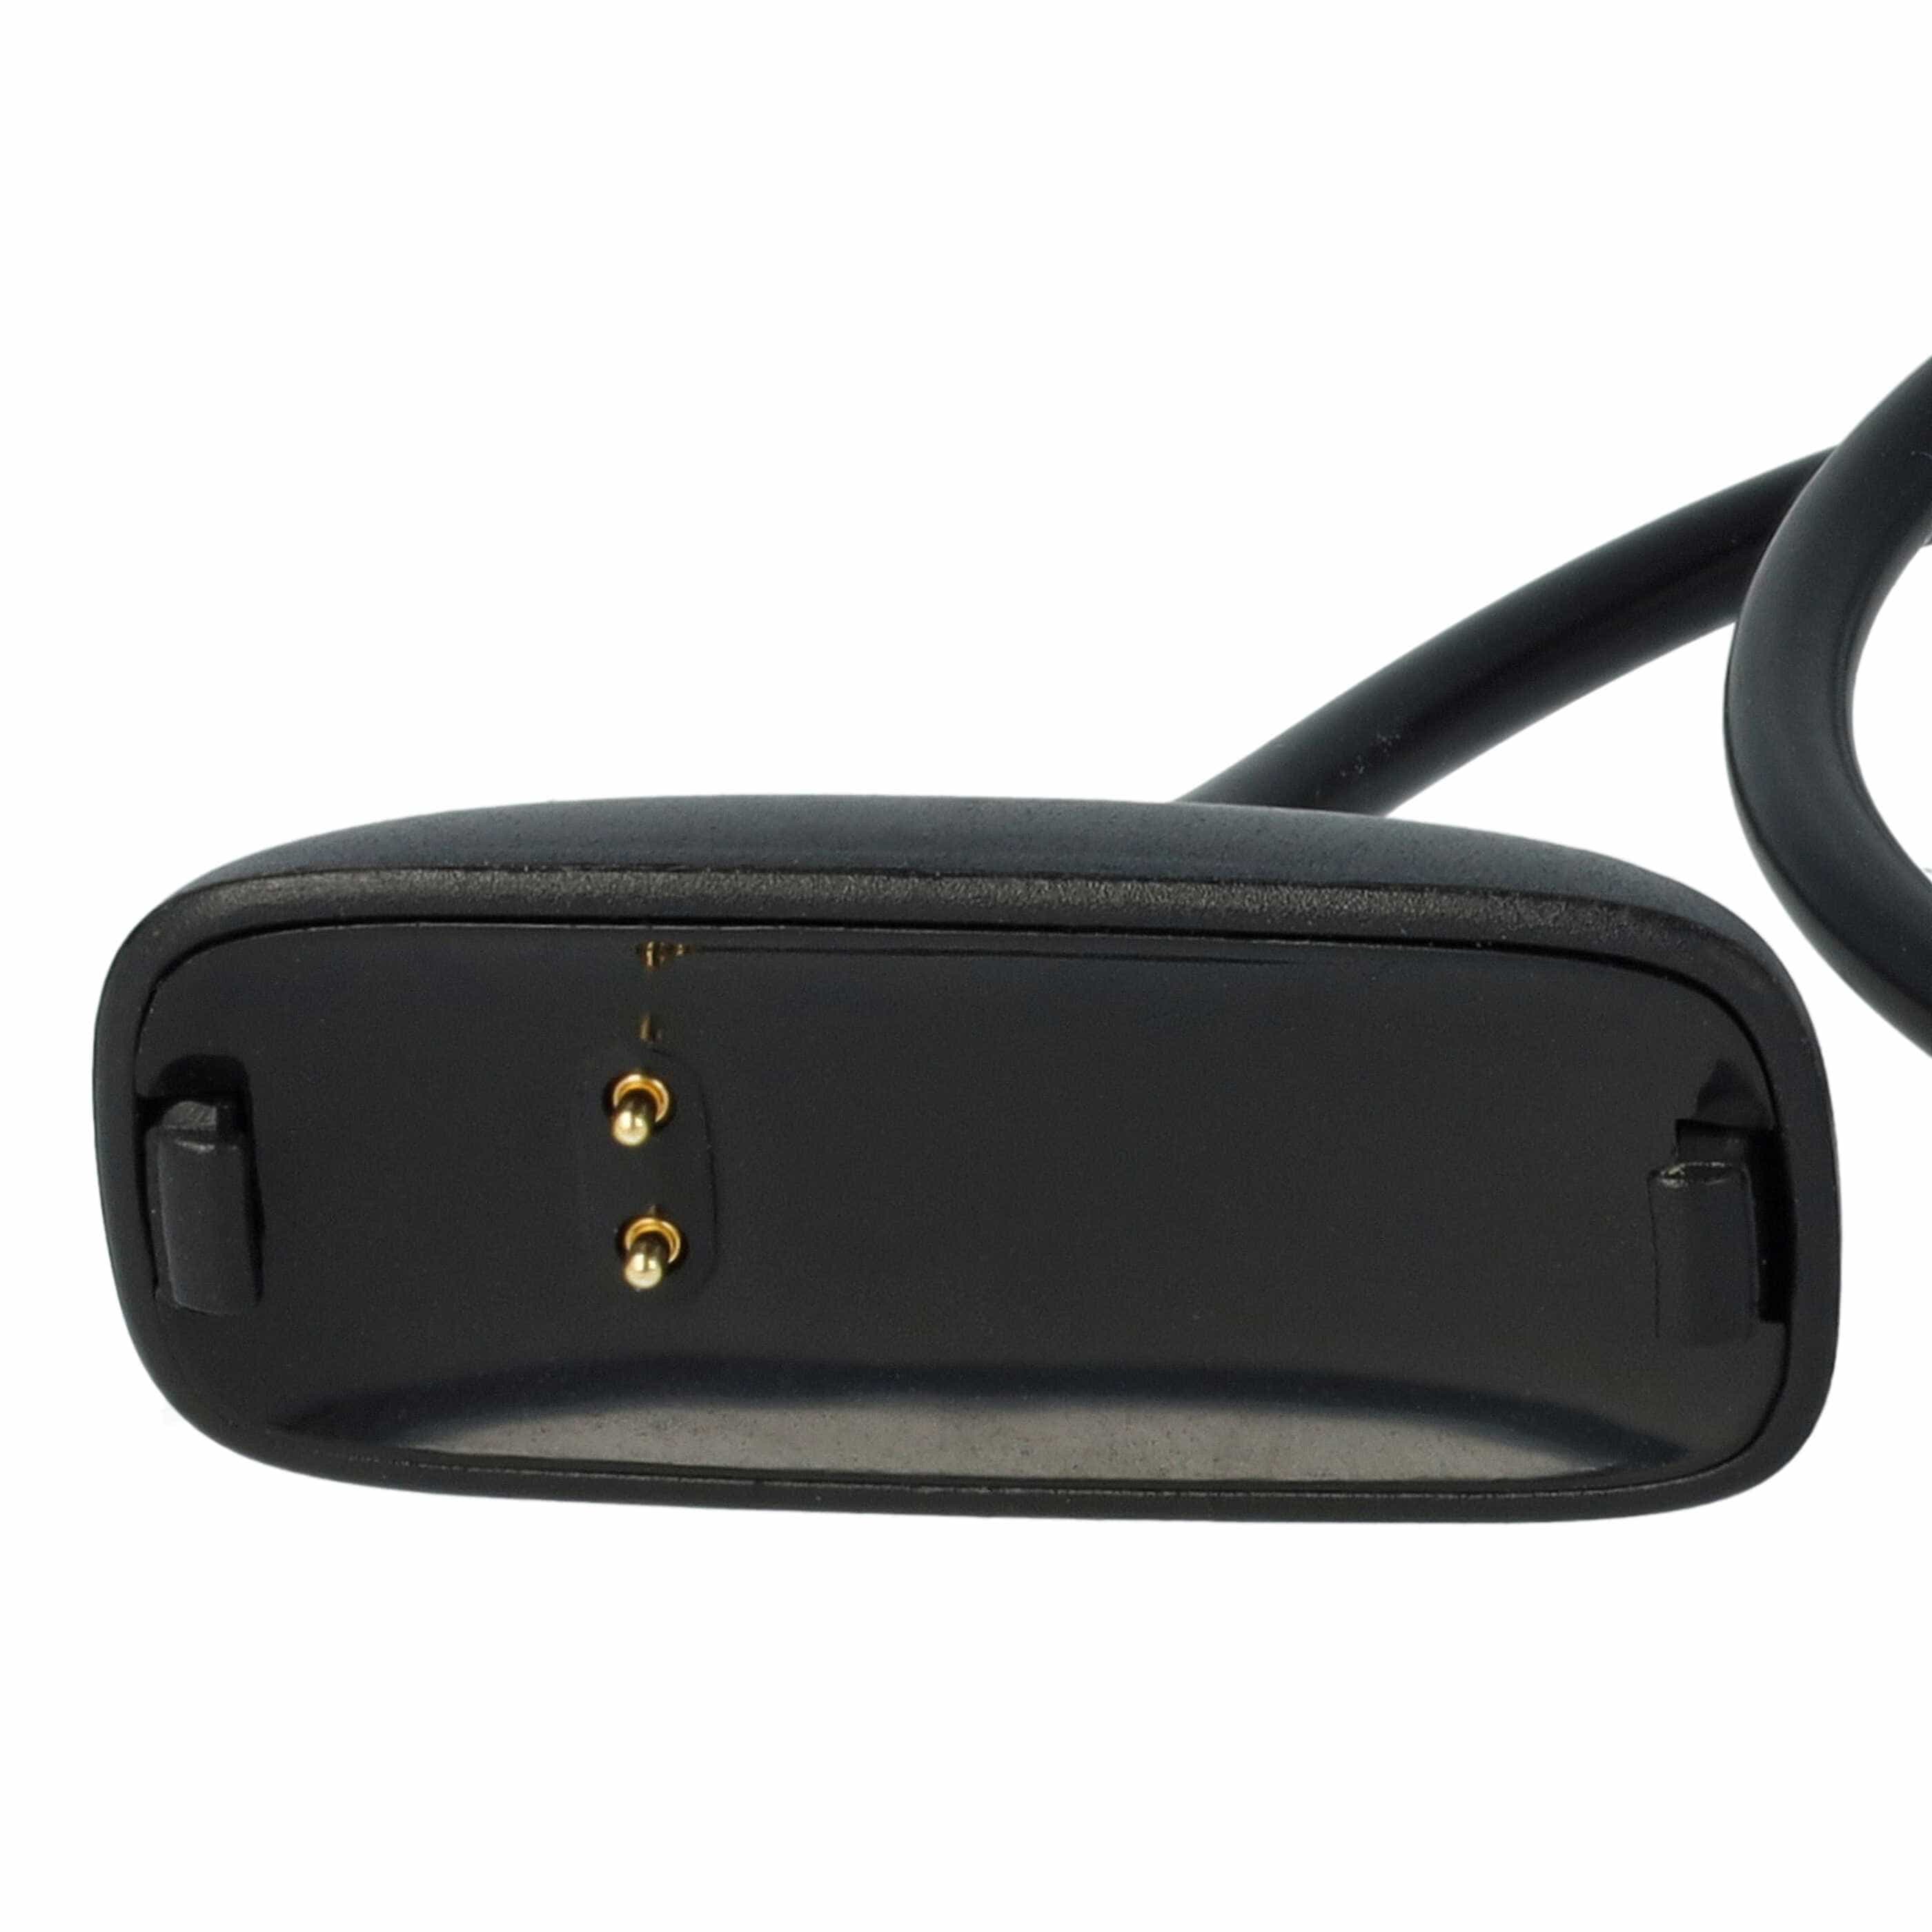 Cavo di ricarica USB per smartwatch Fitbit Ace - nero 30 cm